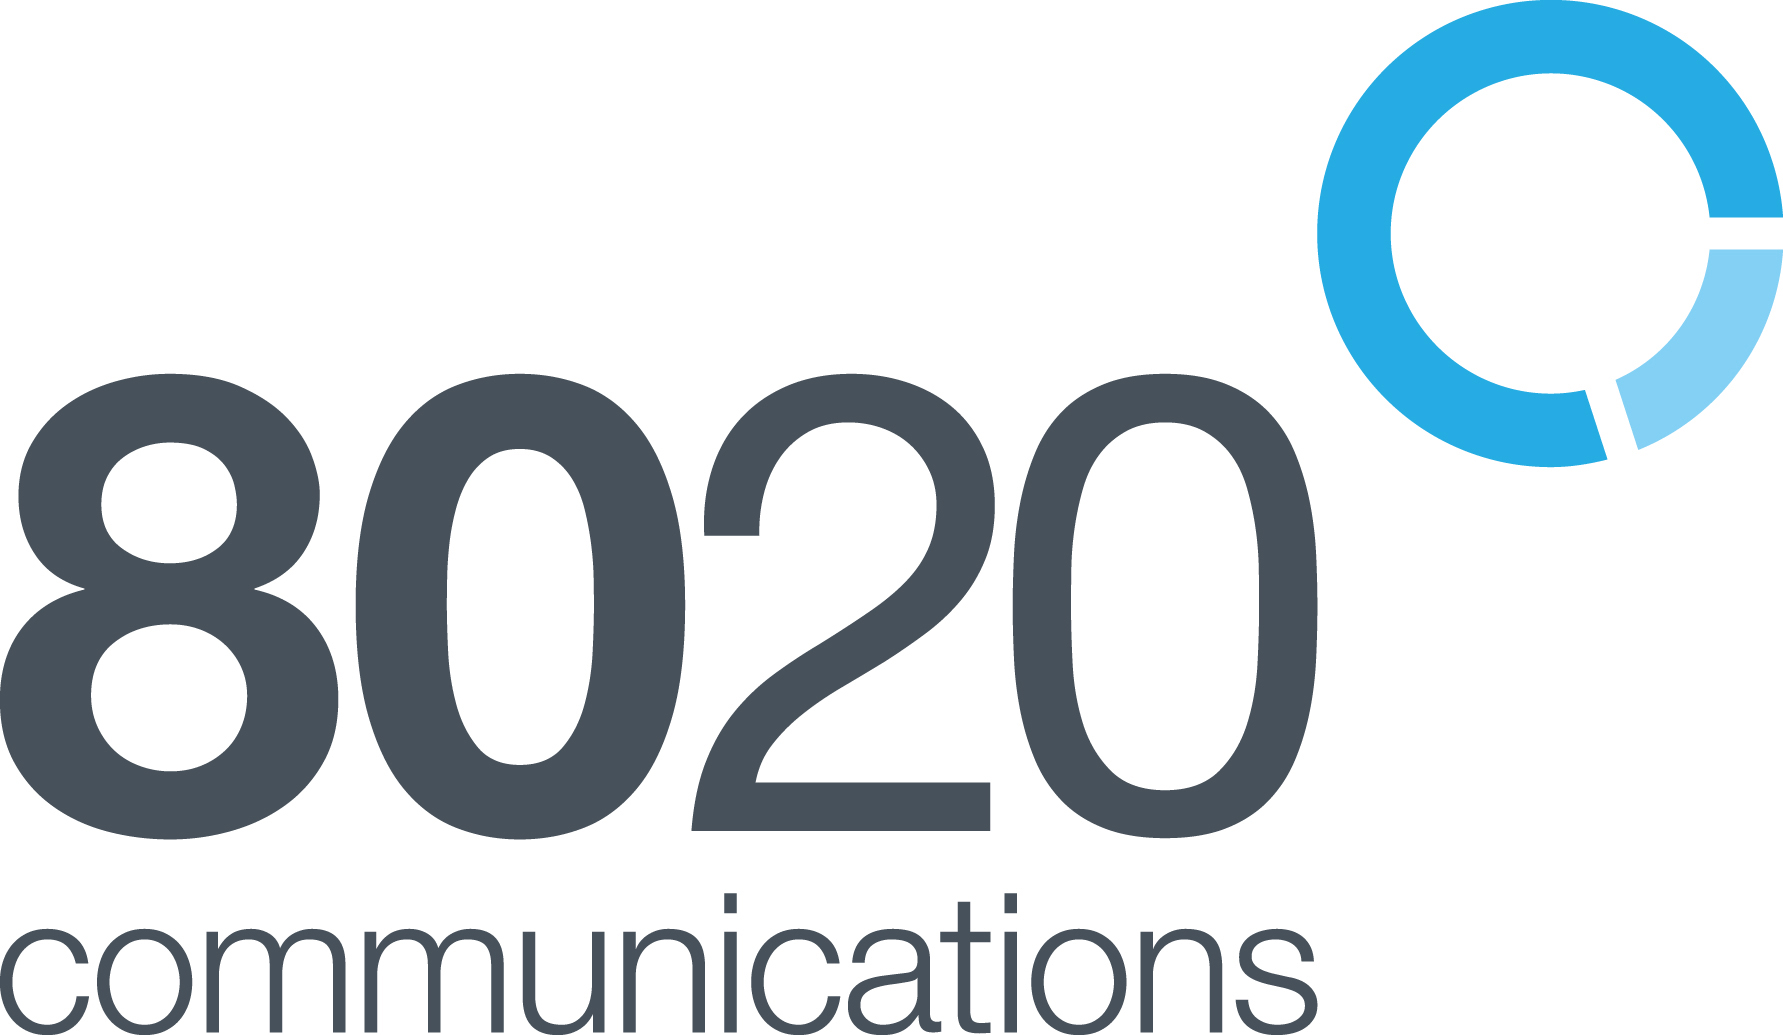 8020 Communications